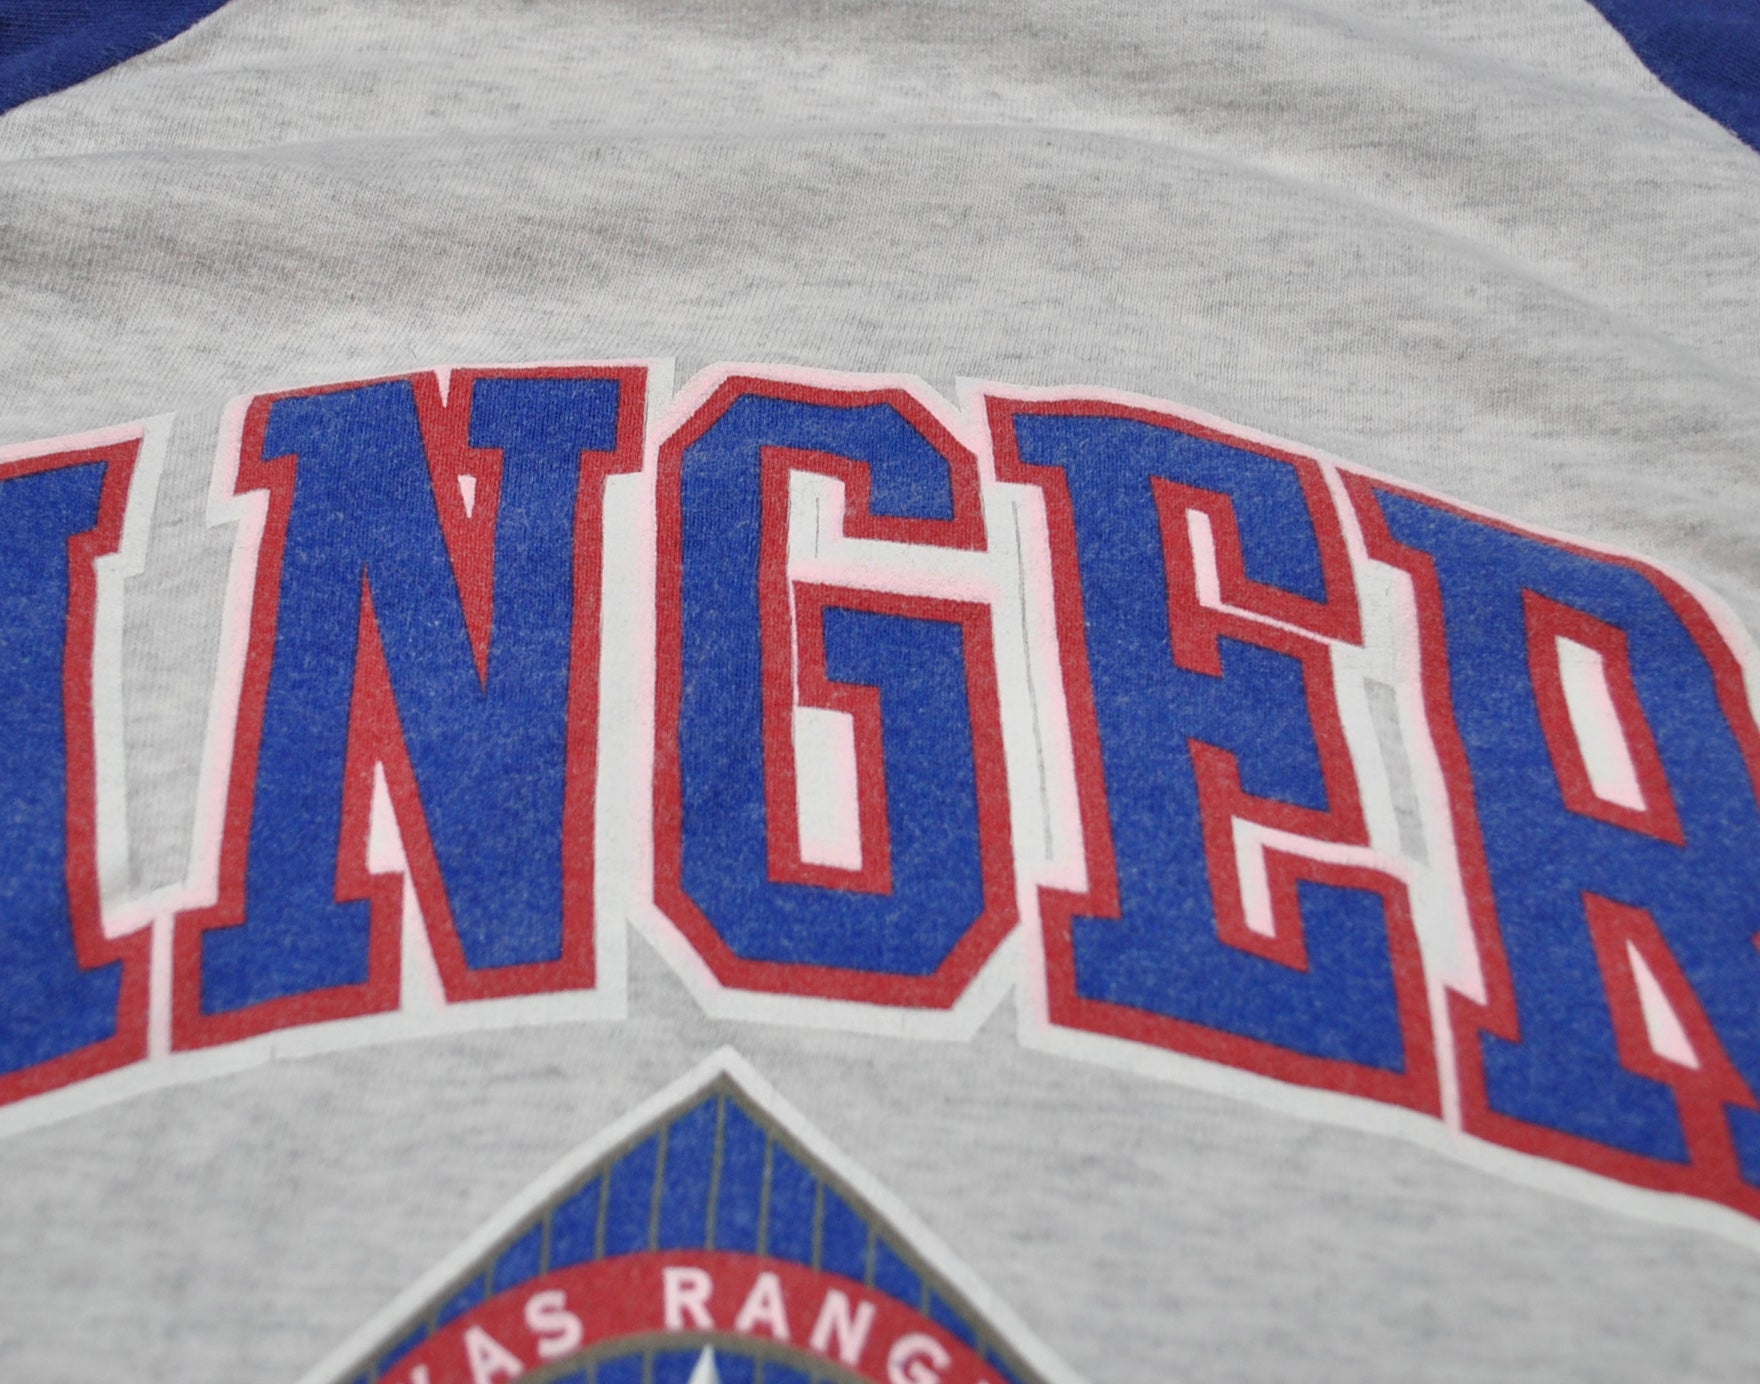 New York Rangers Polos, Golf Shirt, Rangers Polo Shirts